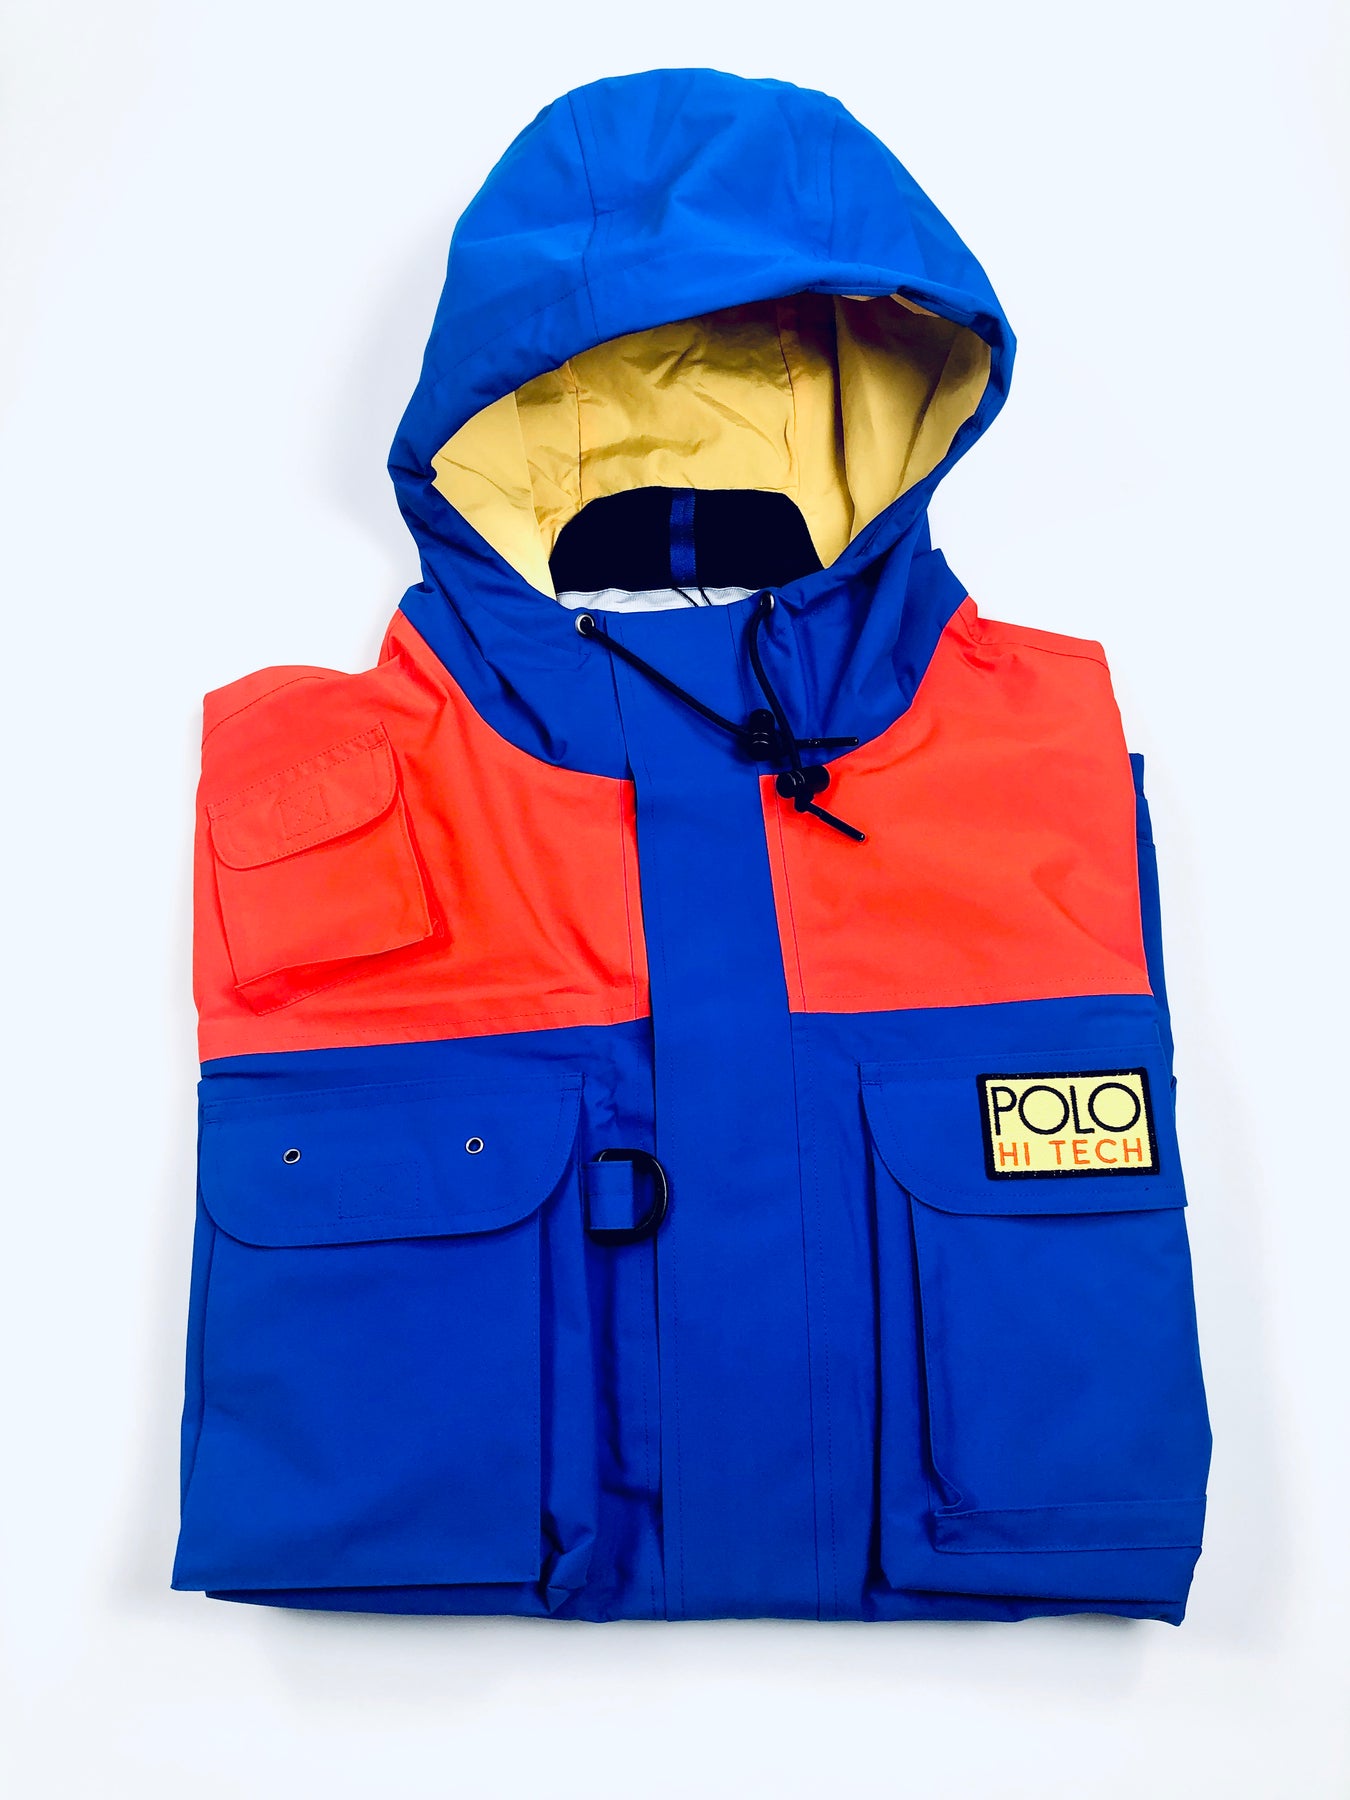 polo hi tech water repellent vest